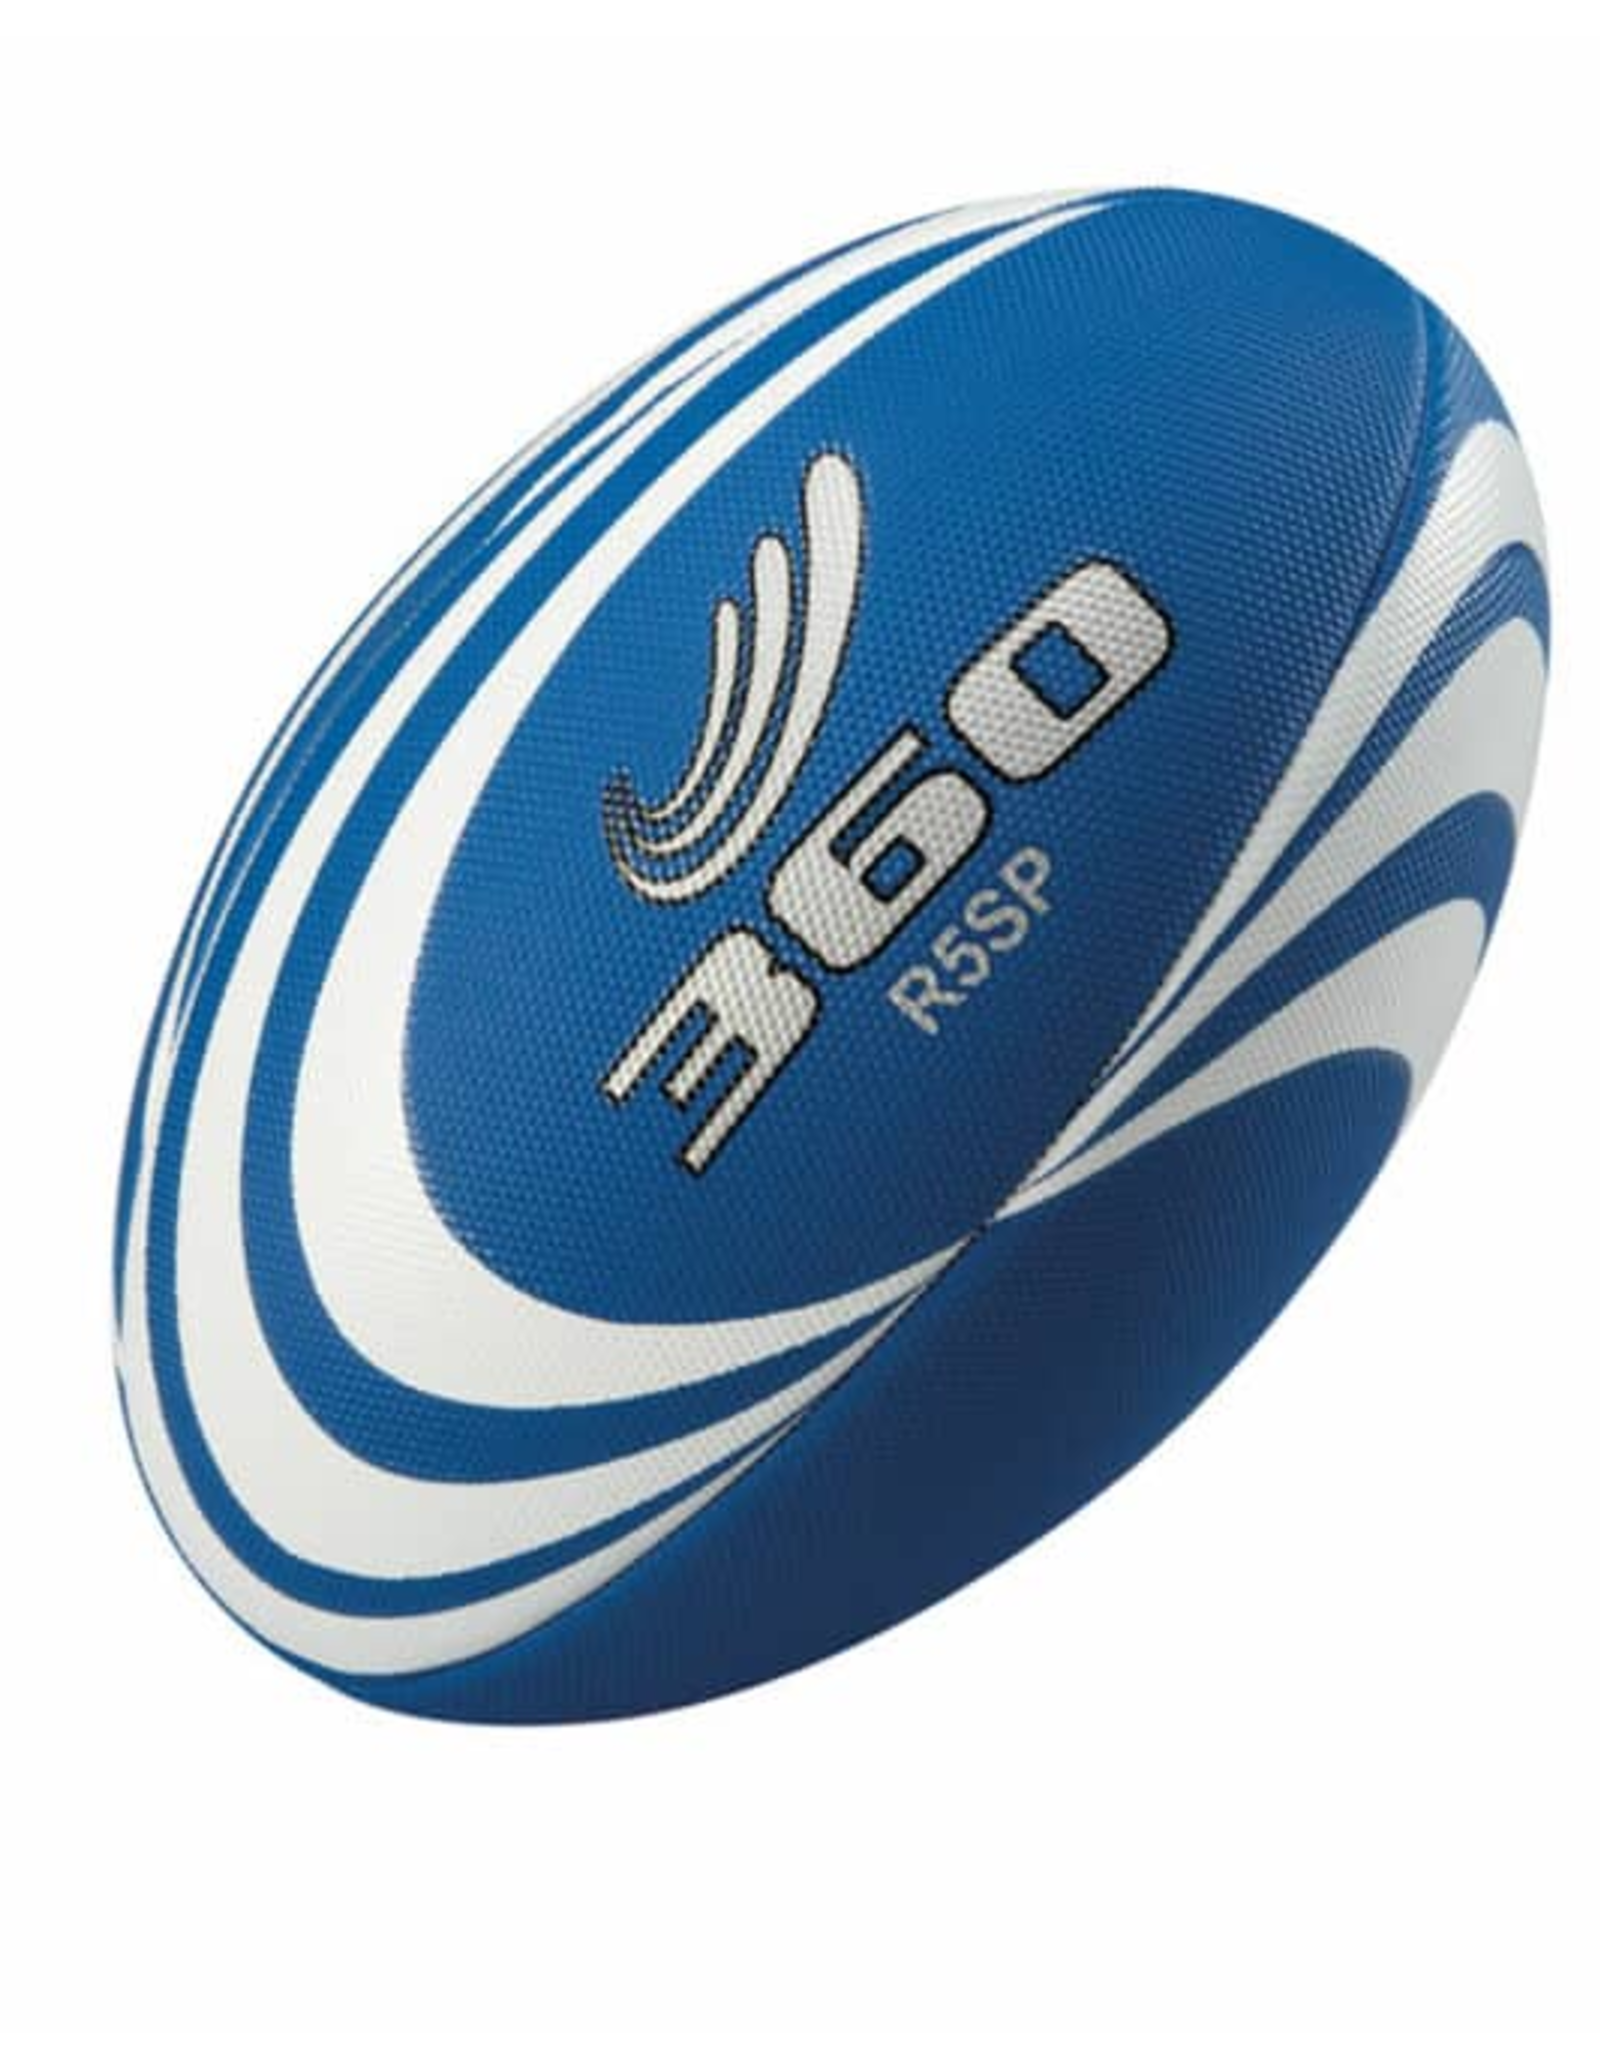 360 Atheletic Ballon de Rugby R5SP Diamond Tek